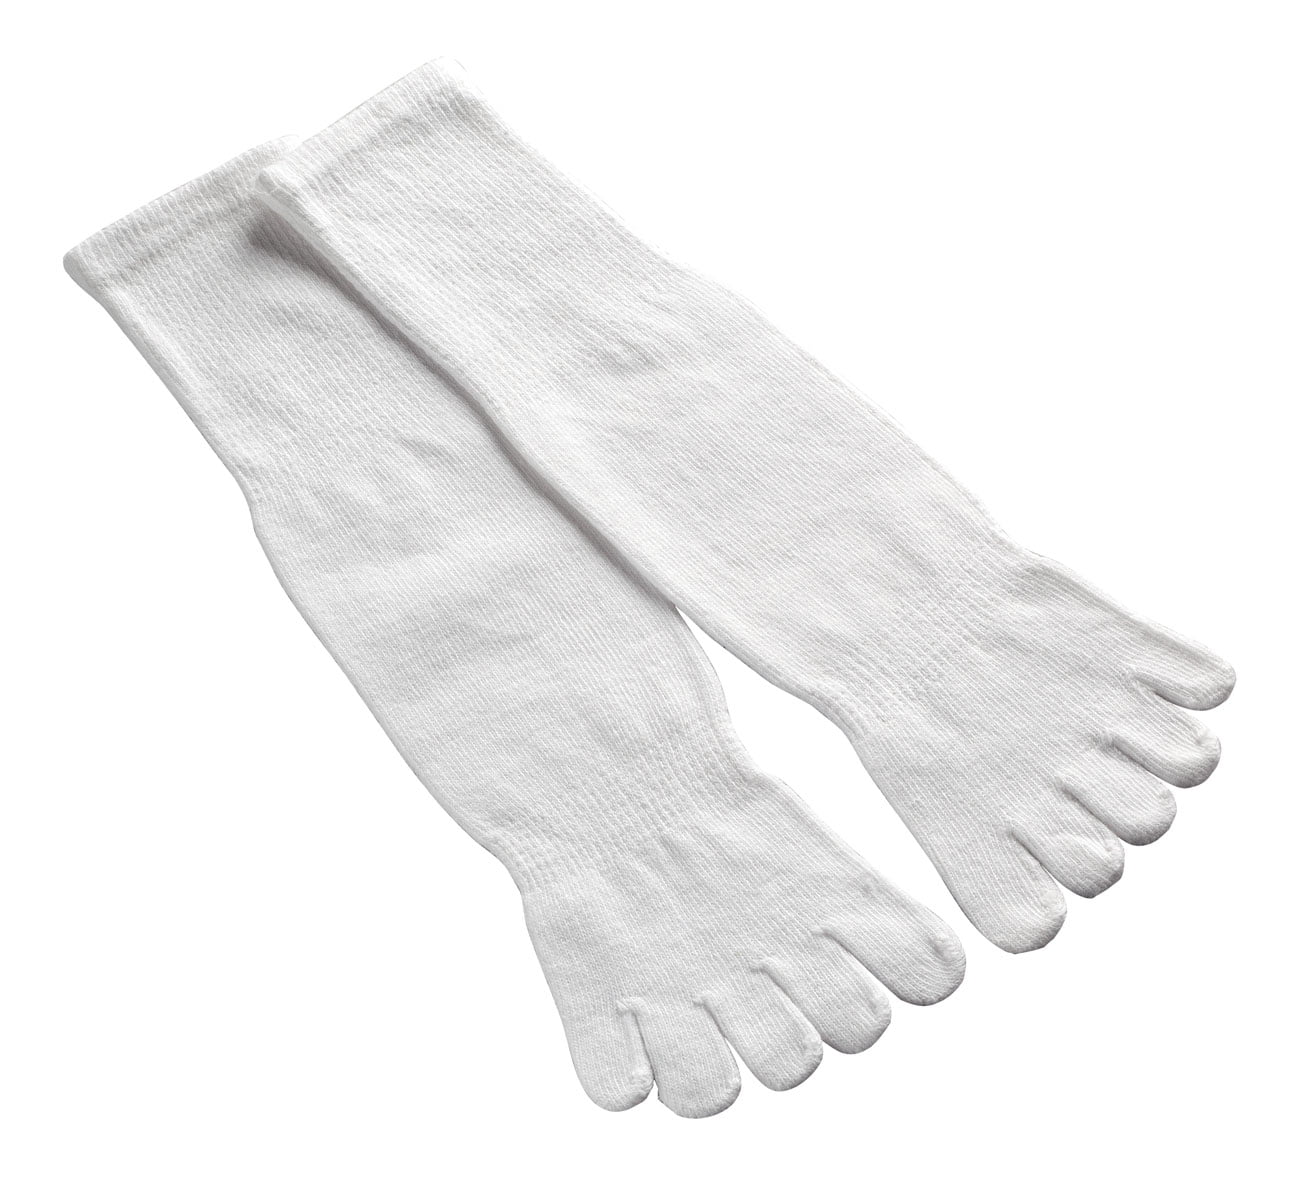 6 Pairs Soft Sports Men Comfortable Five Seperate Finger Toe Socks Cotton J4G9 